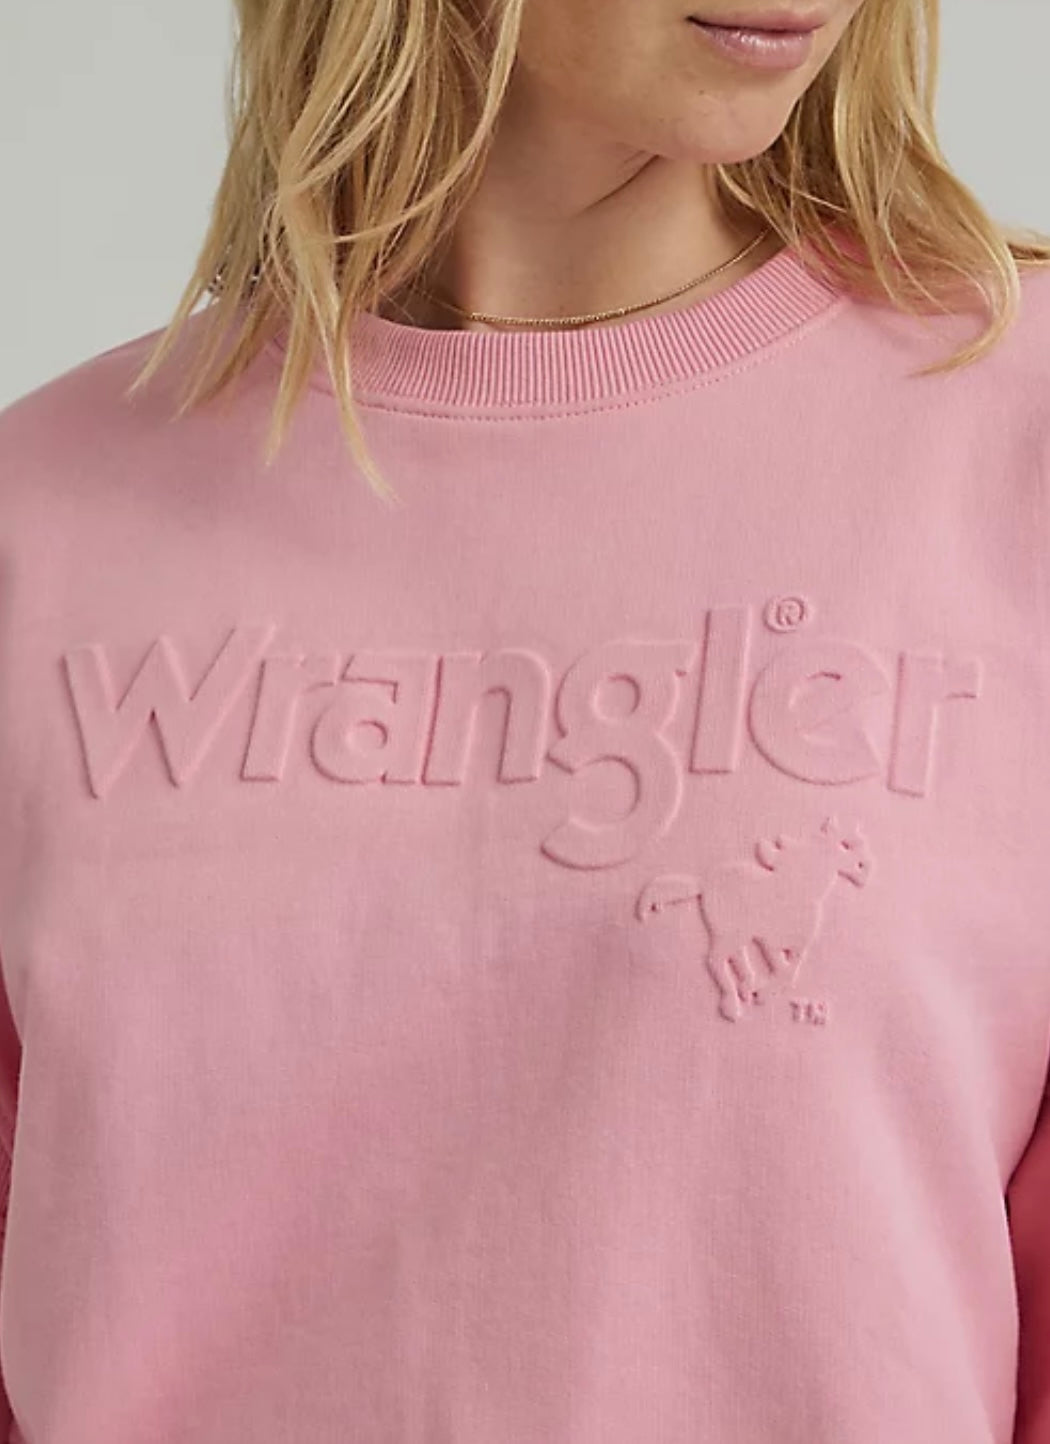 The Wrangler Puffy Crew Sweatshirt